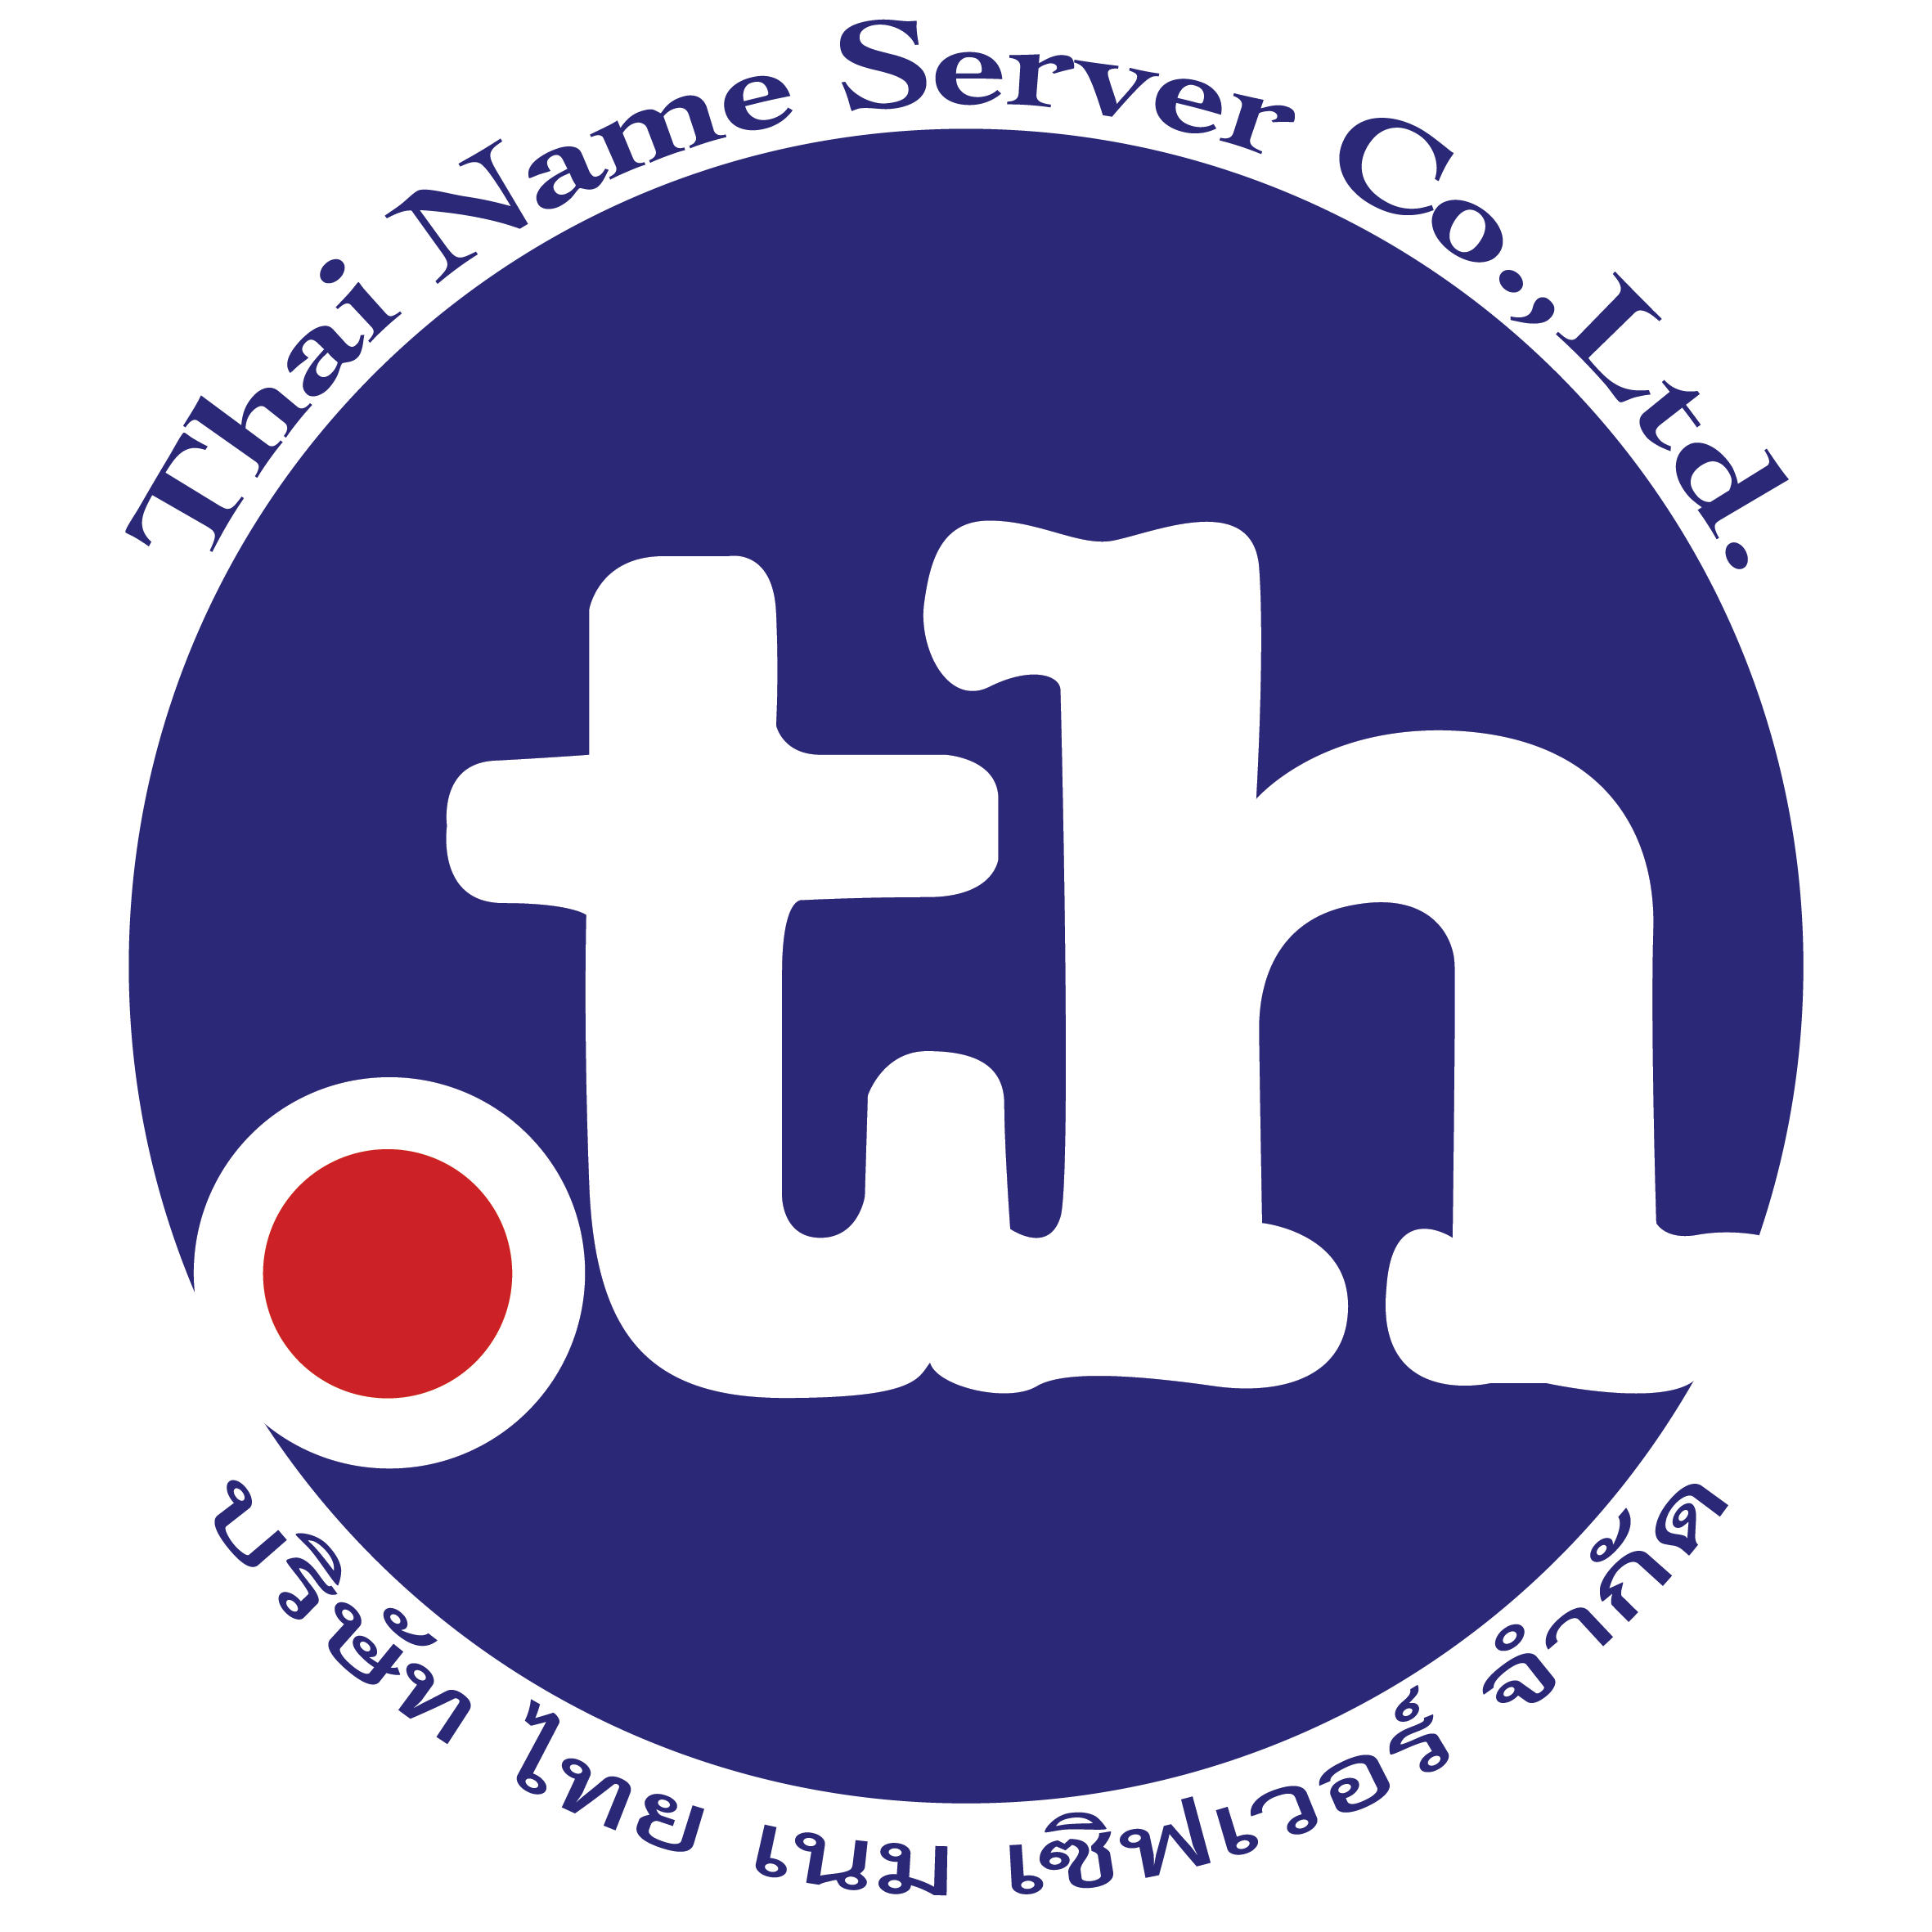 Thai Name Server Co.,Ltd